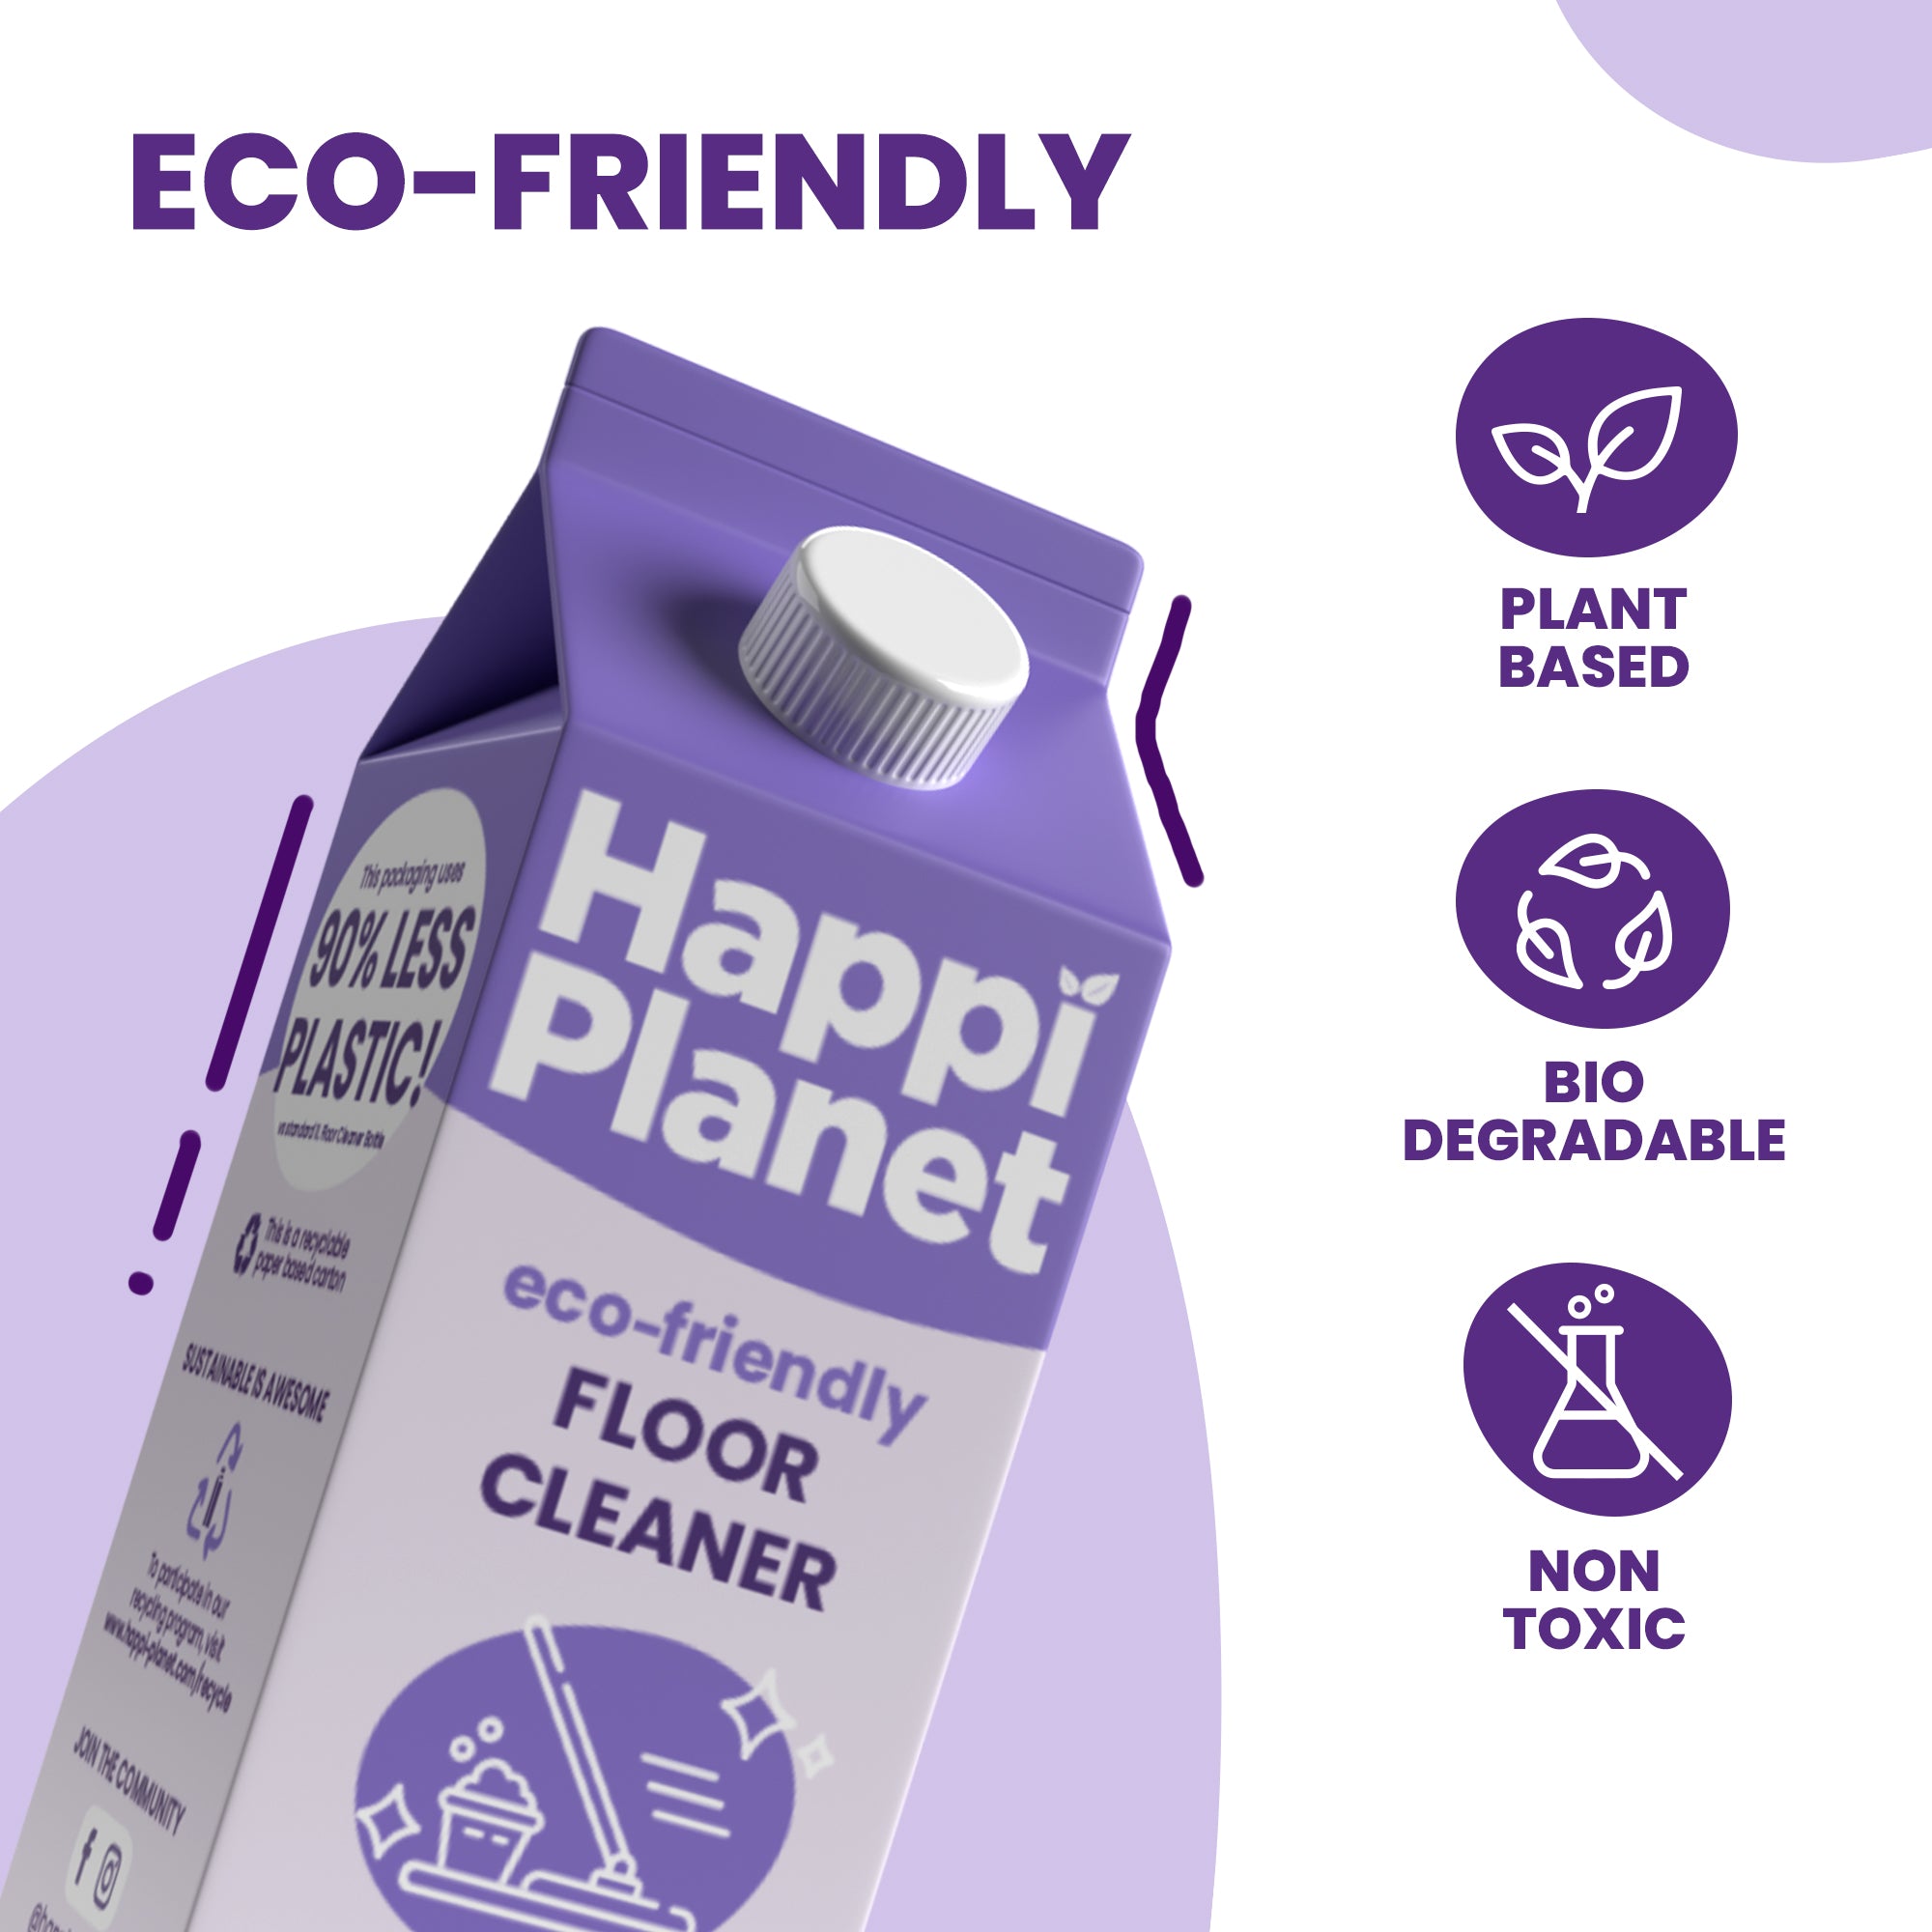 Happi Planet- Eco-Friendly Floor Cleaner